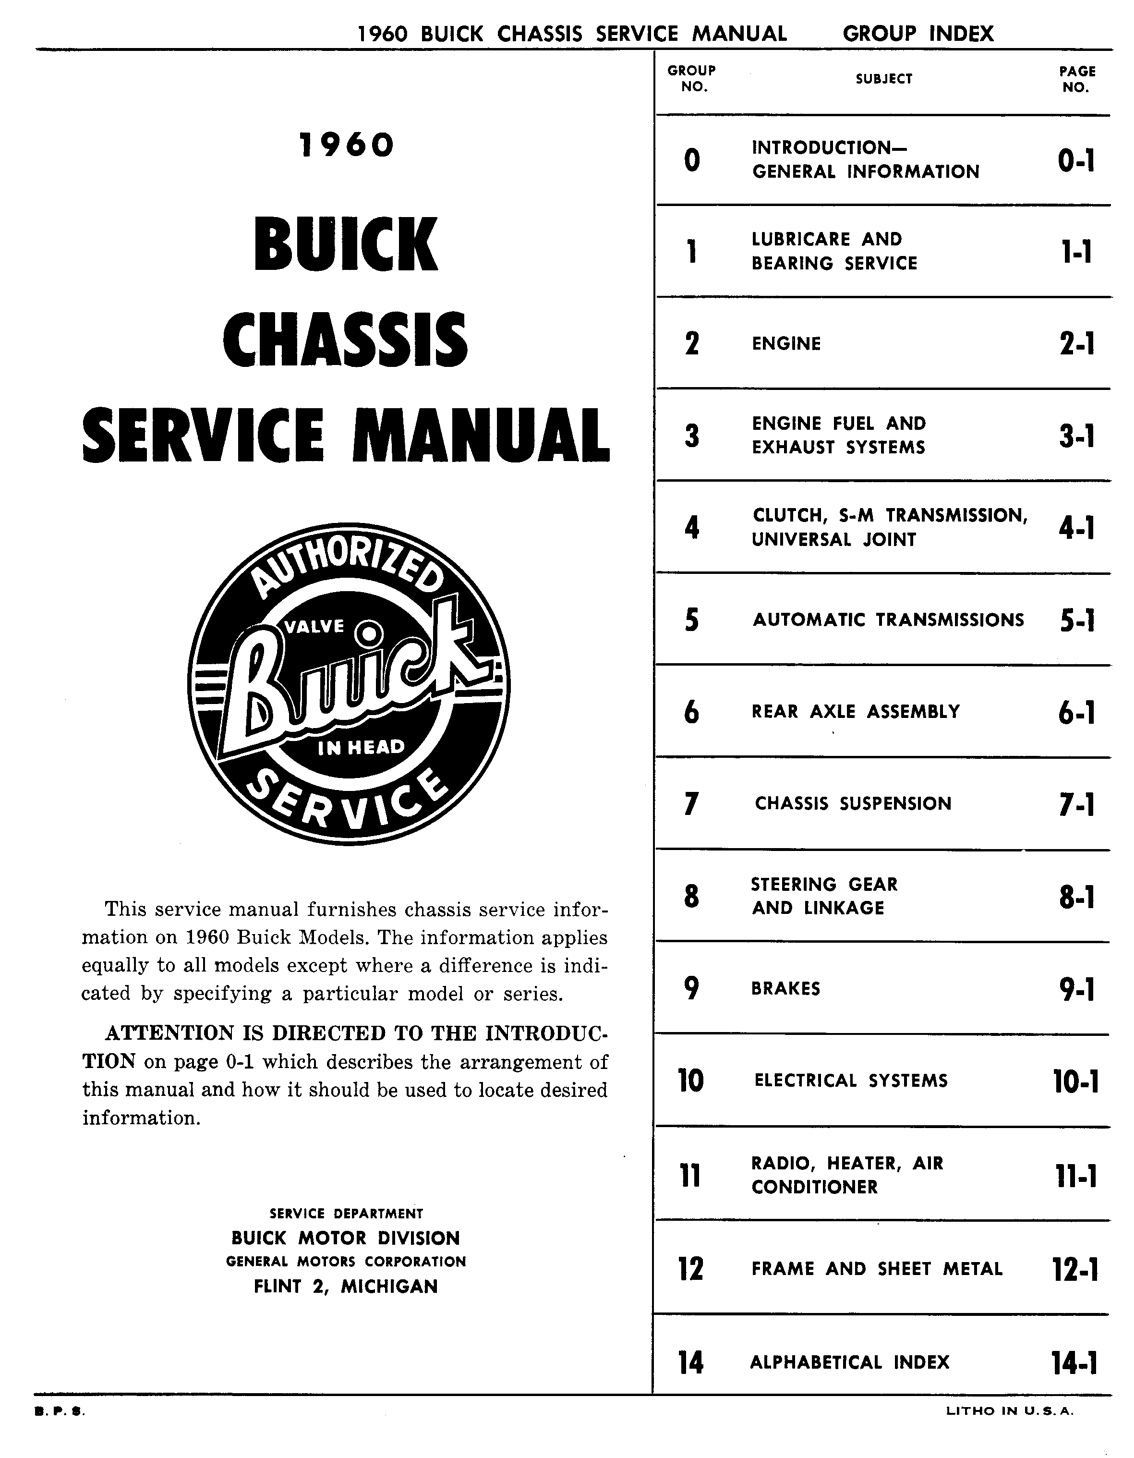 n_01 1960 Buick Shop Manual - Gen Information-002-002.jpg